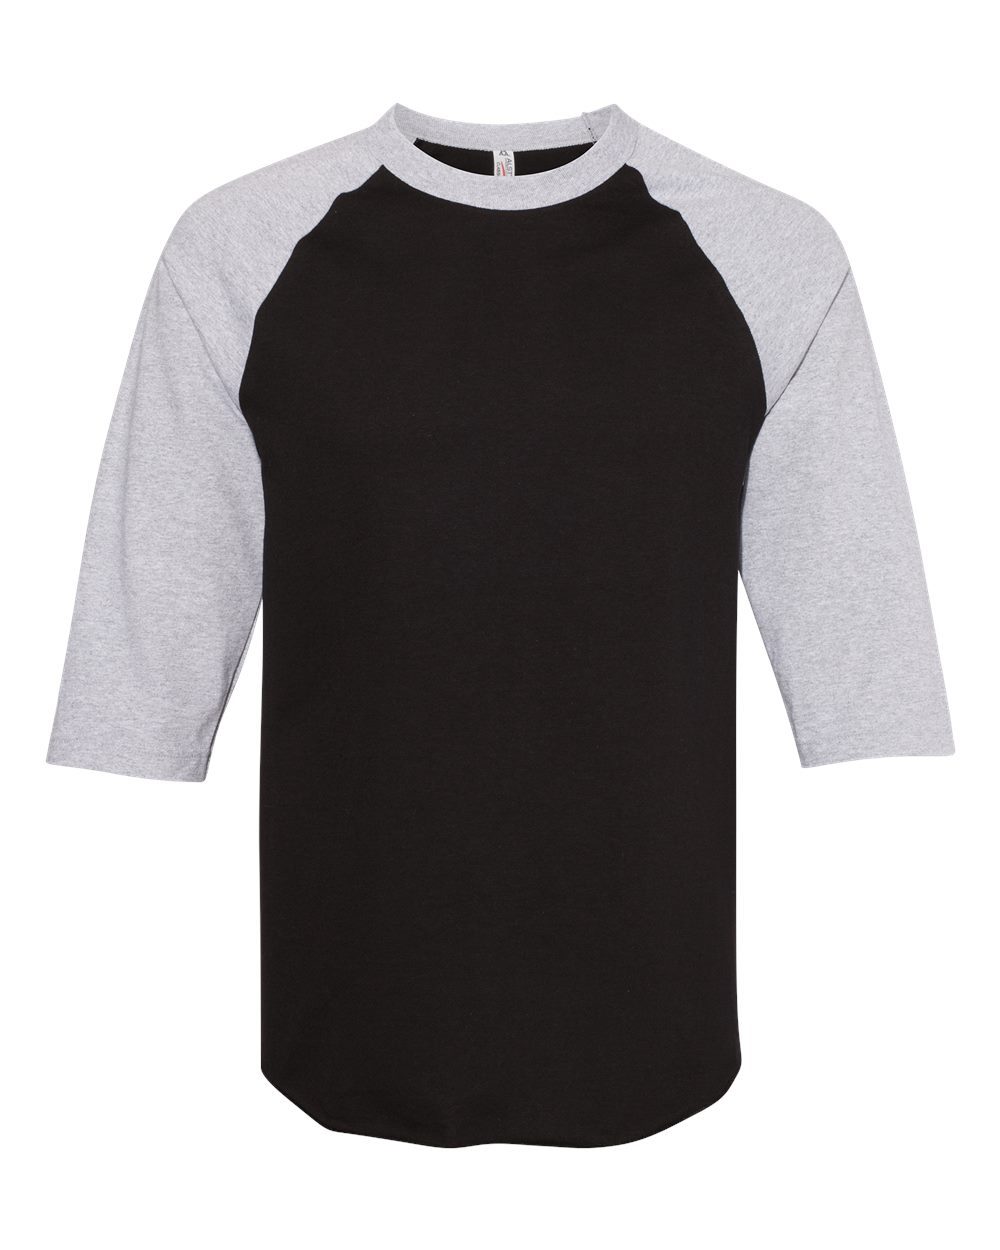 ALSTYLE 1334 - Classic Raglan Three-Quarter Sleeve T-Shirt